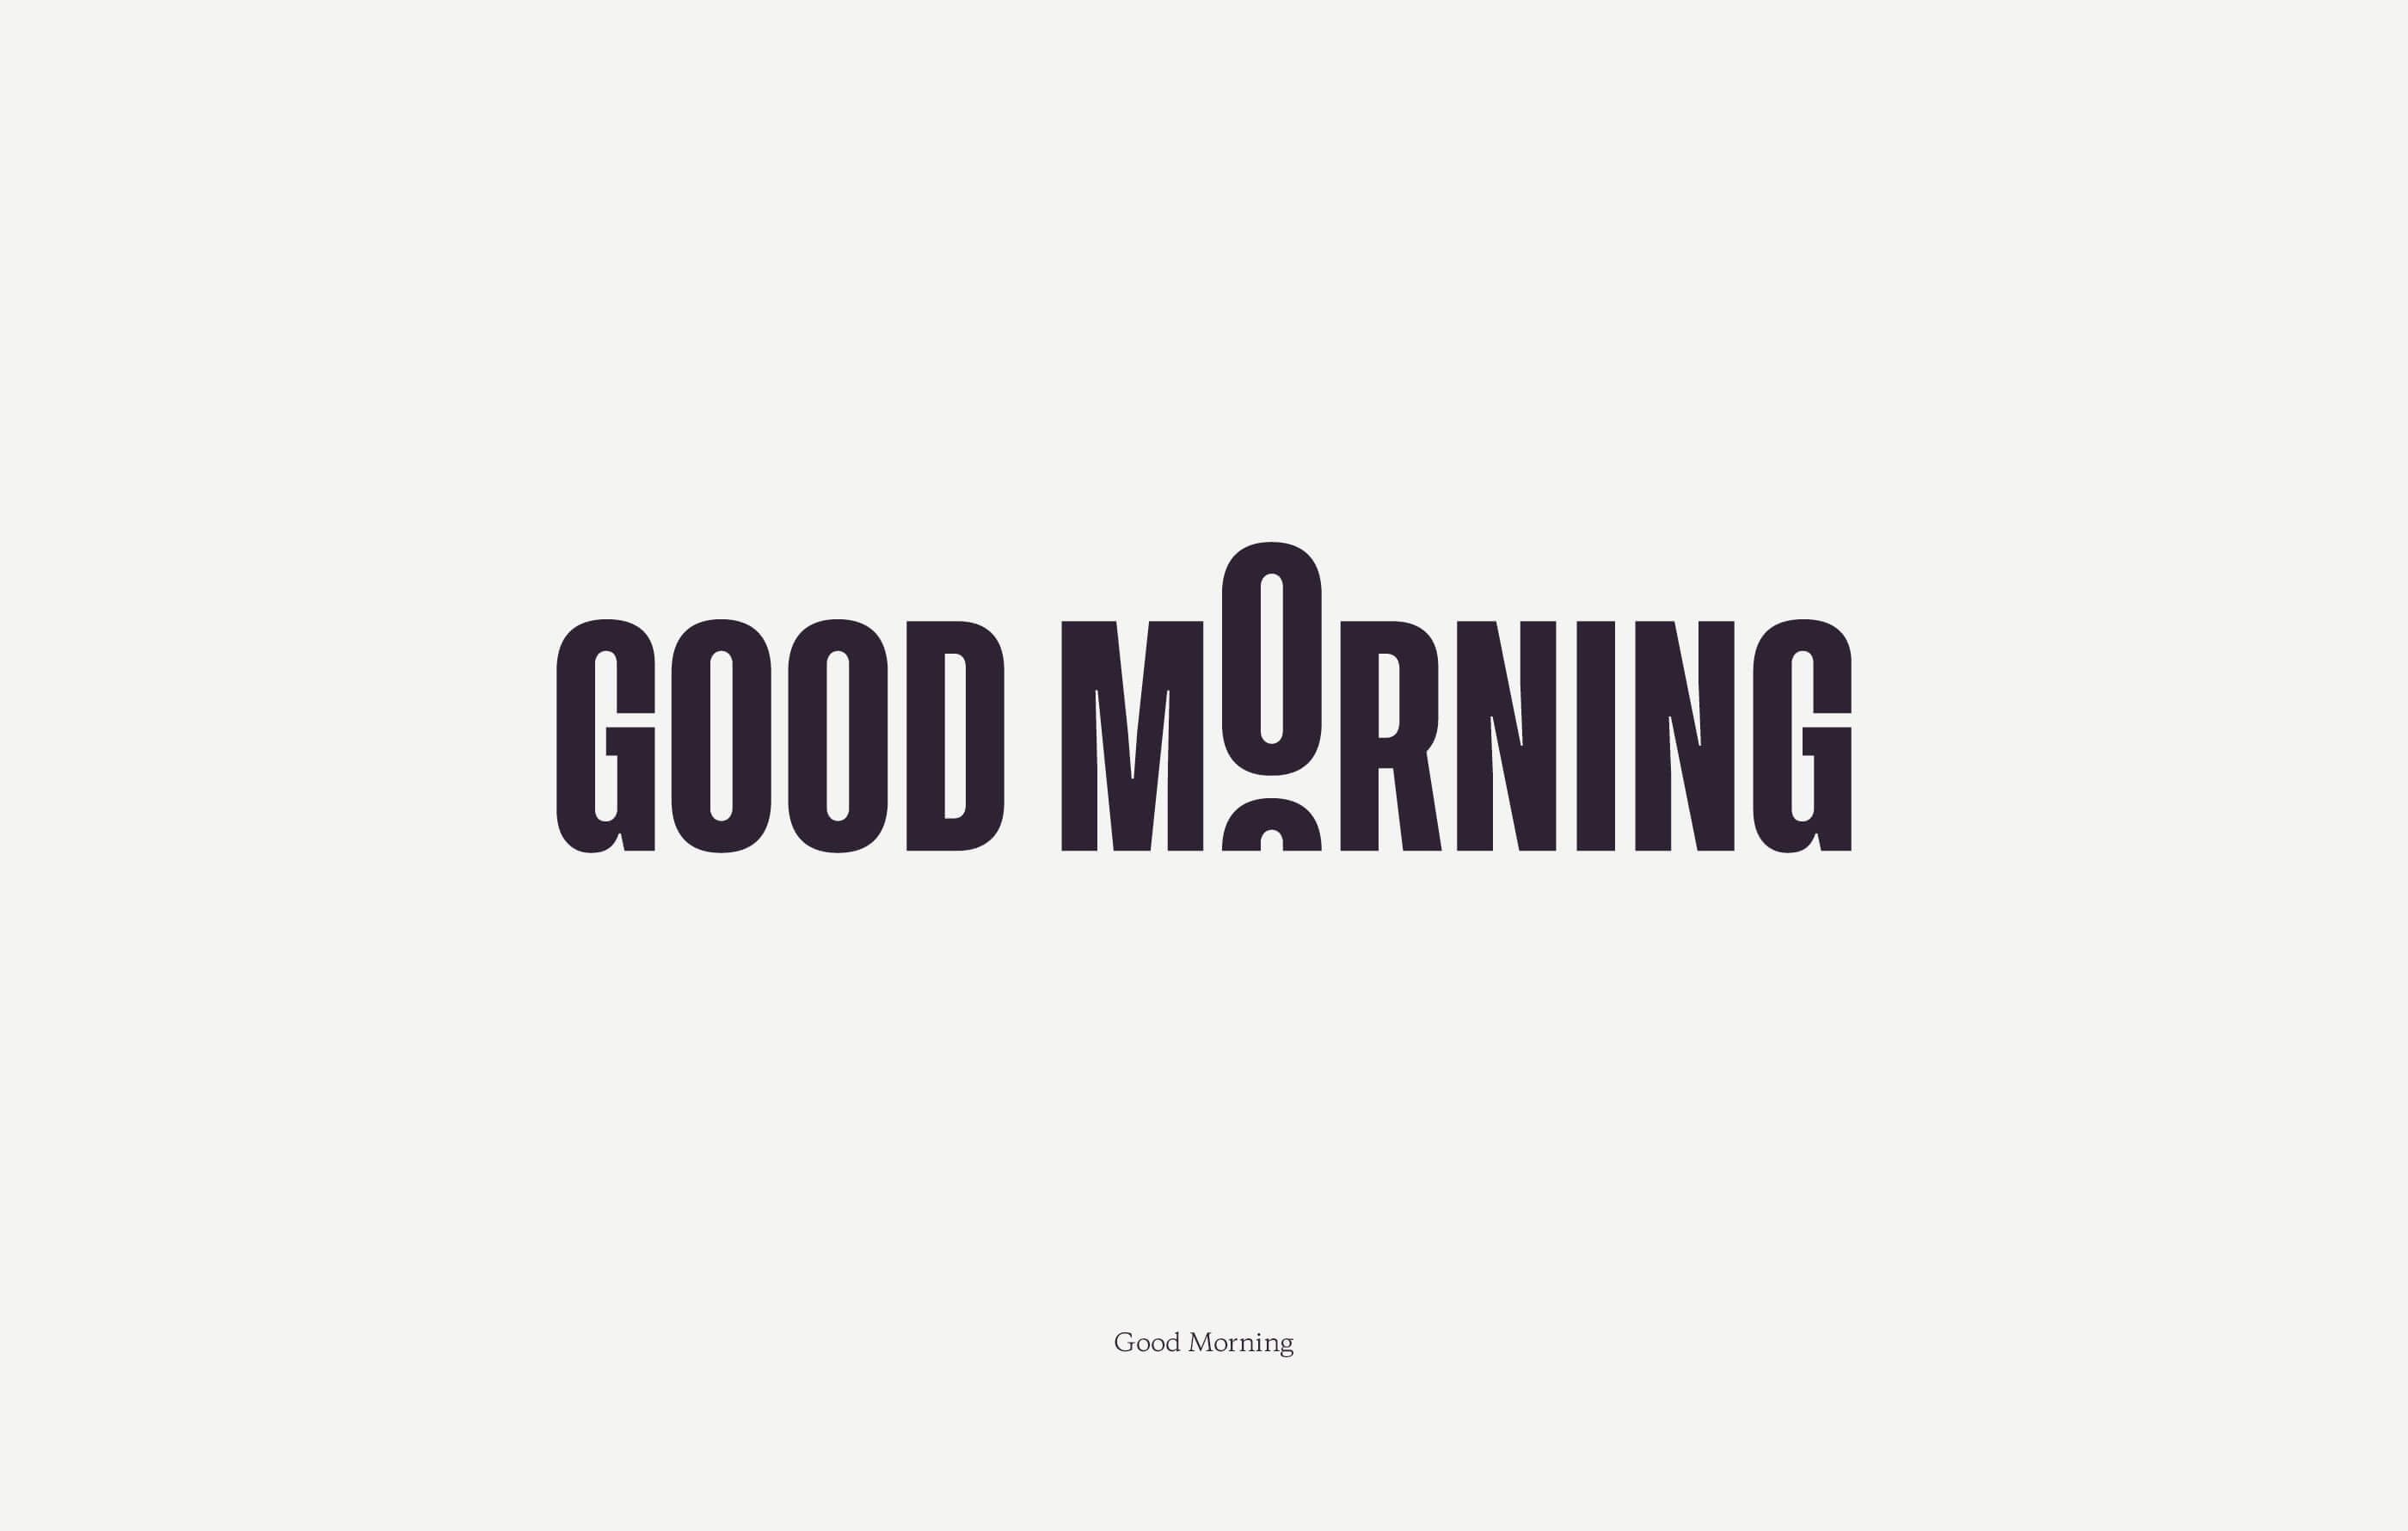 Black Good Morning logo design on a grey background